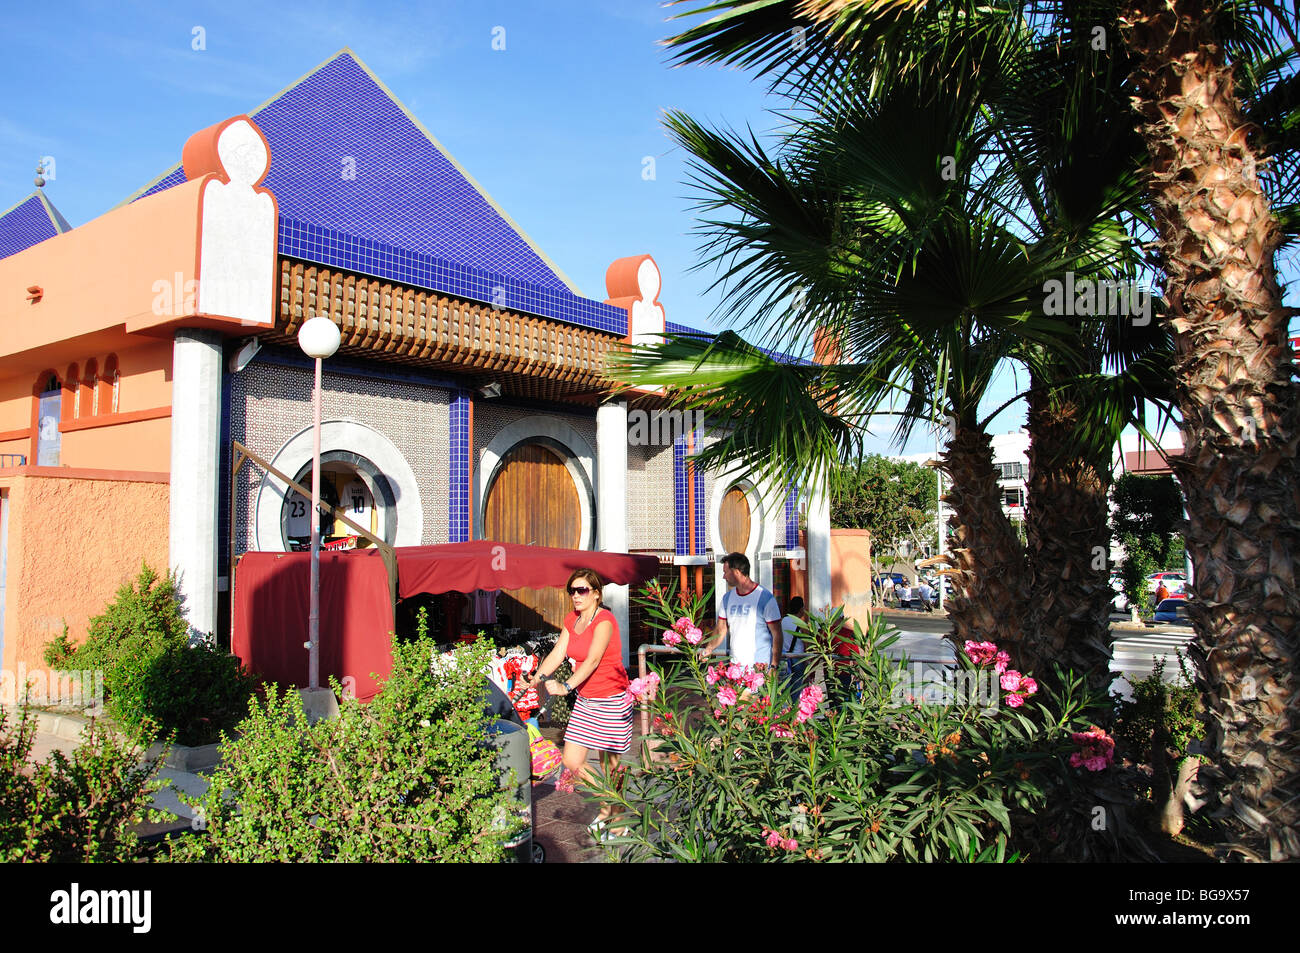 Yumbo Shopping Centre, Playa del Ingles, Gran Canaria, Canary Islands, Spain Stock Photo